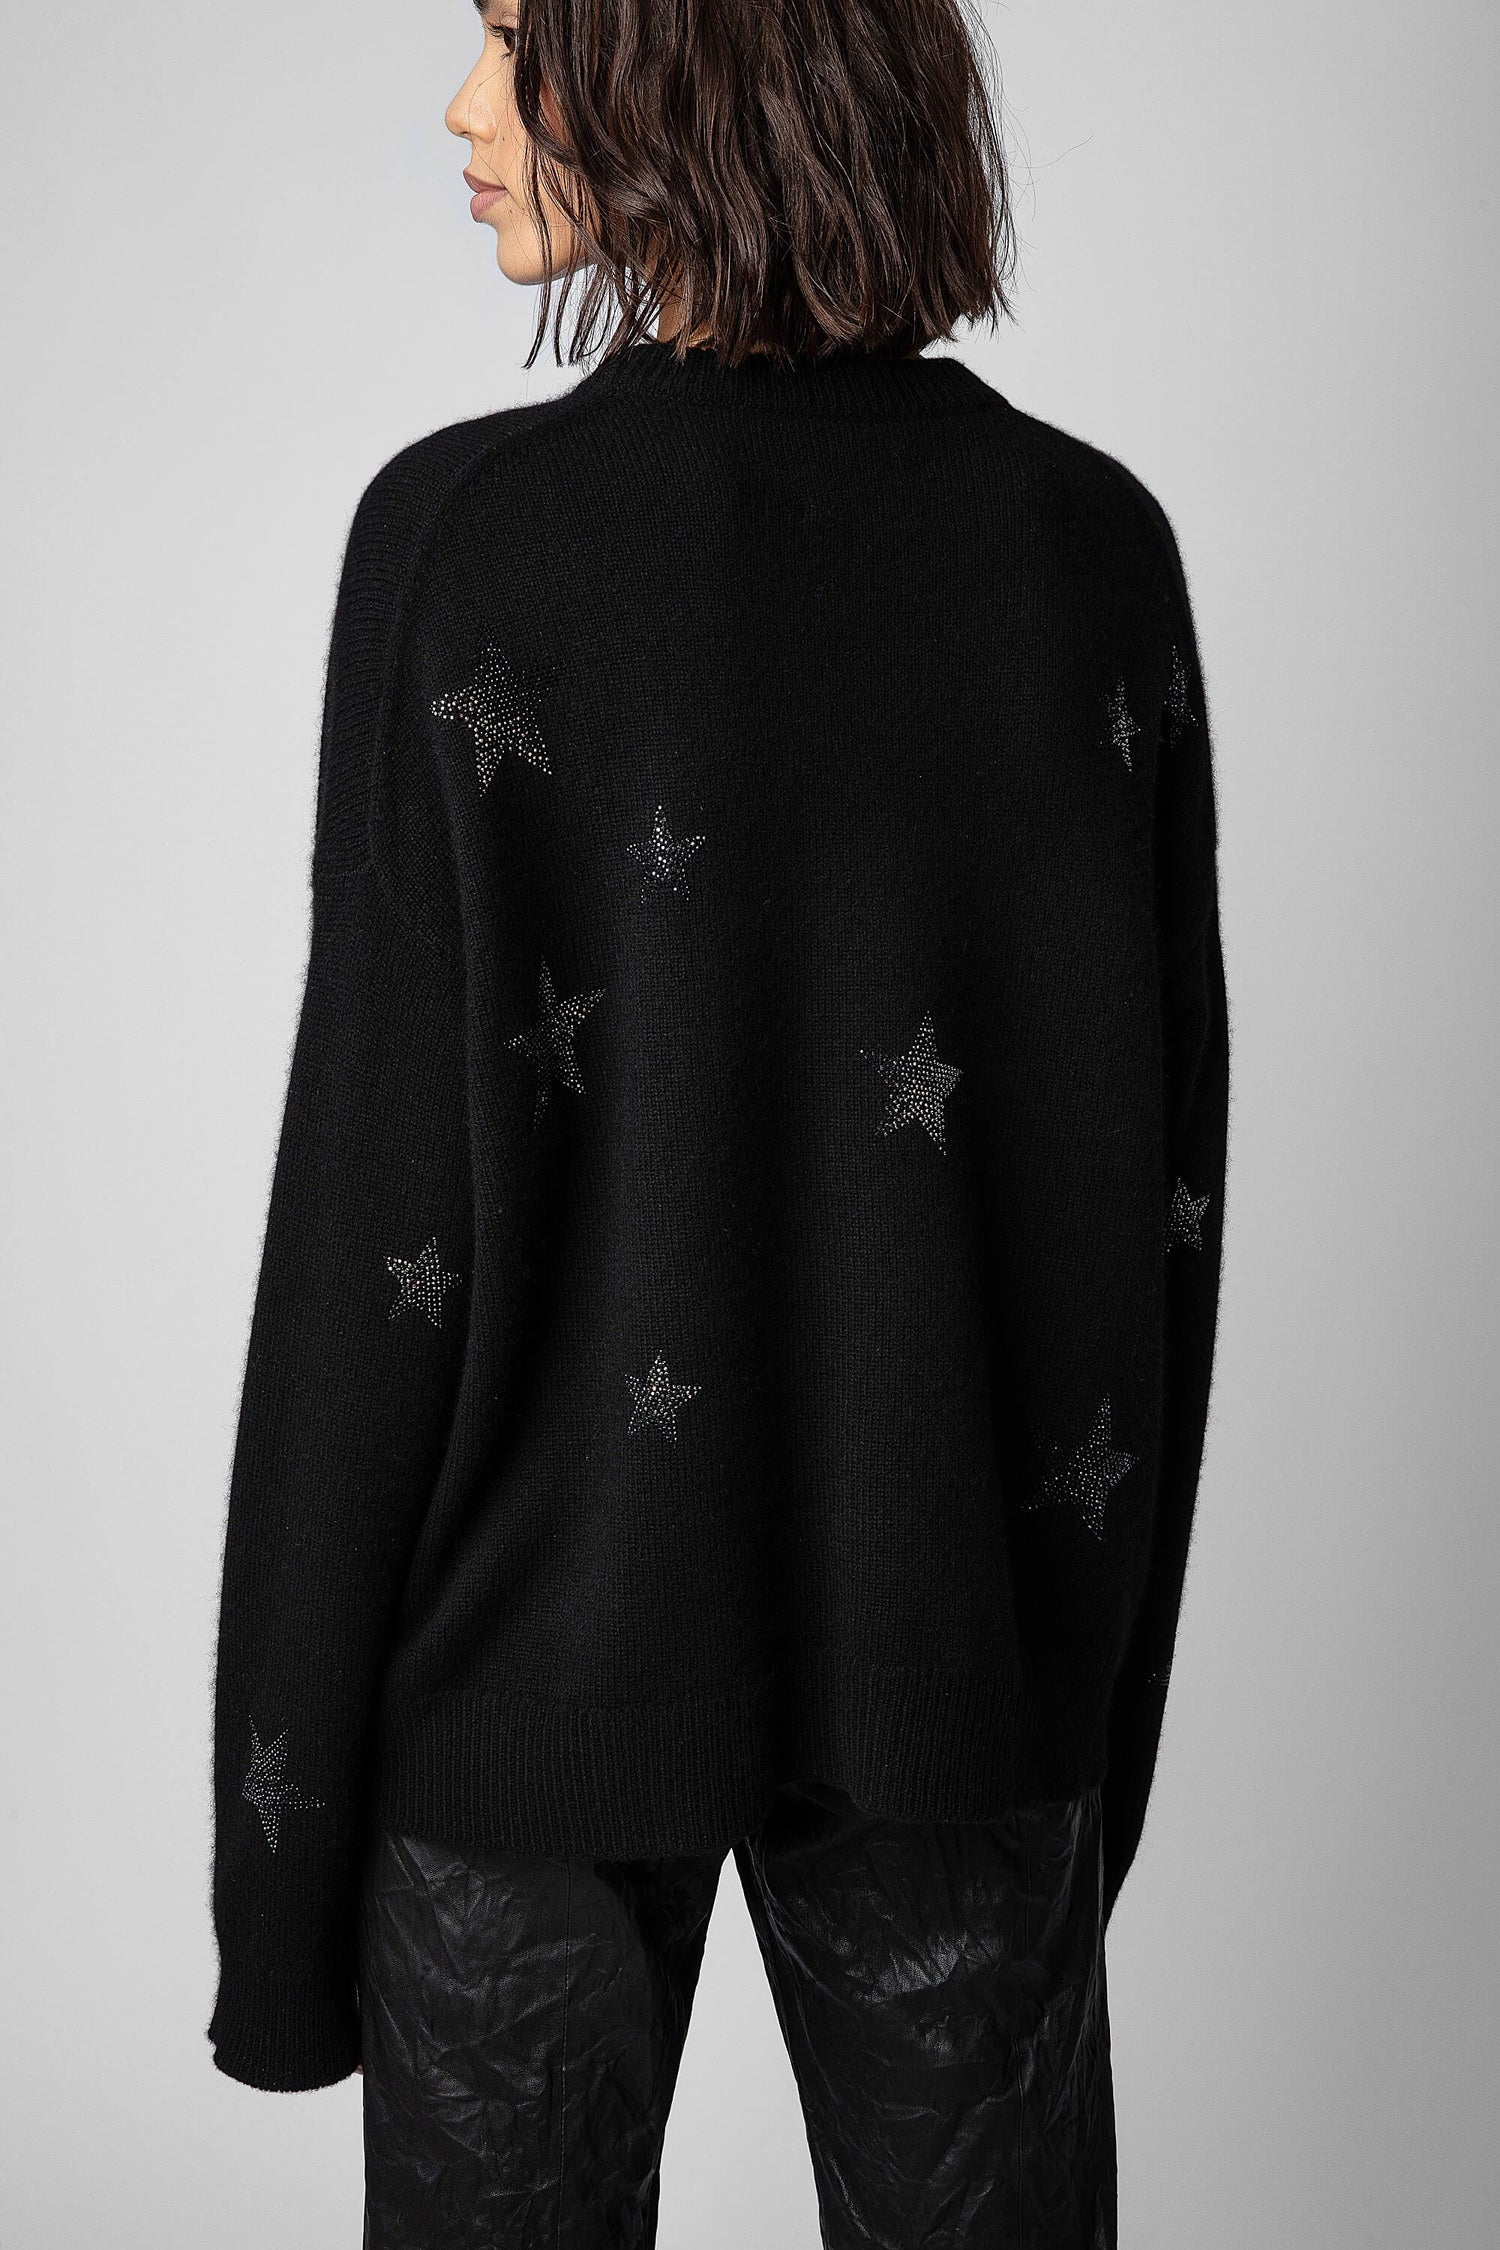 Markus stars cahmere sweater, black